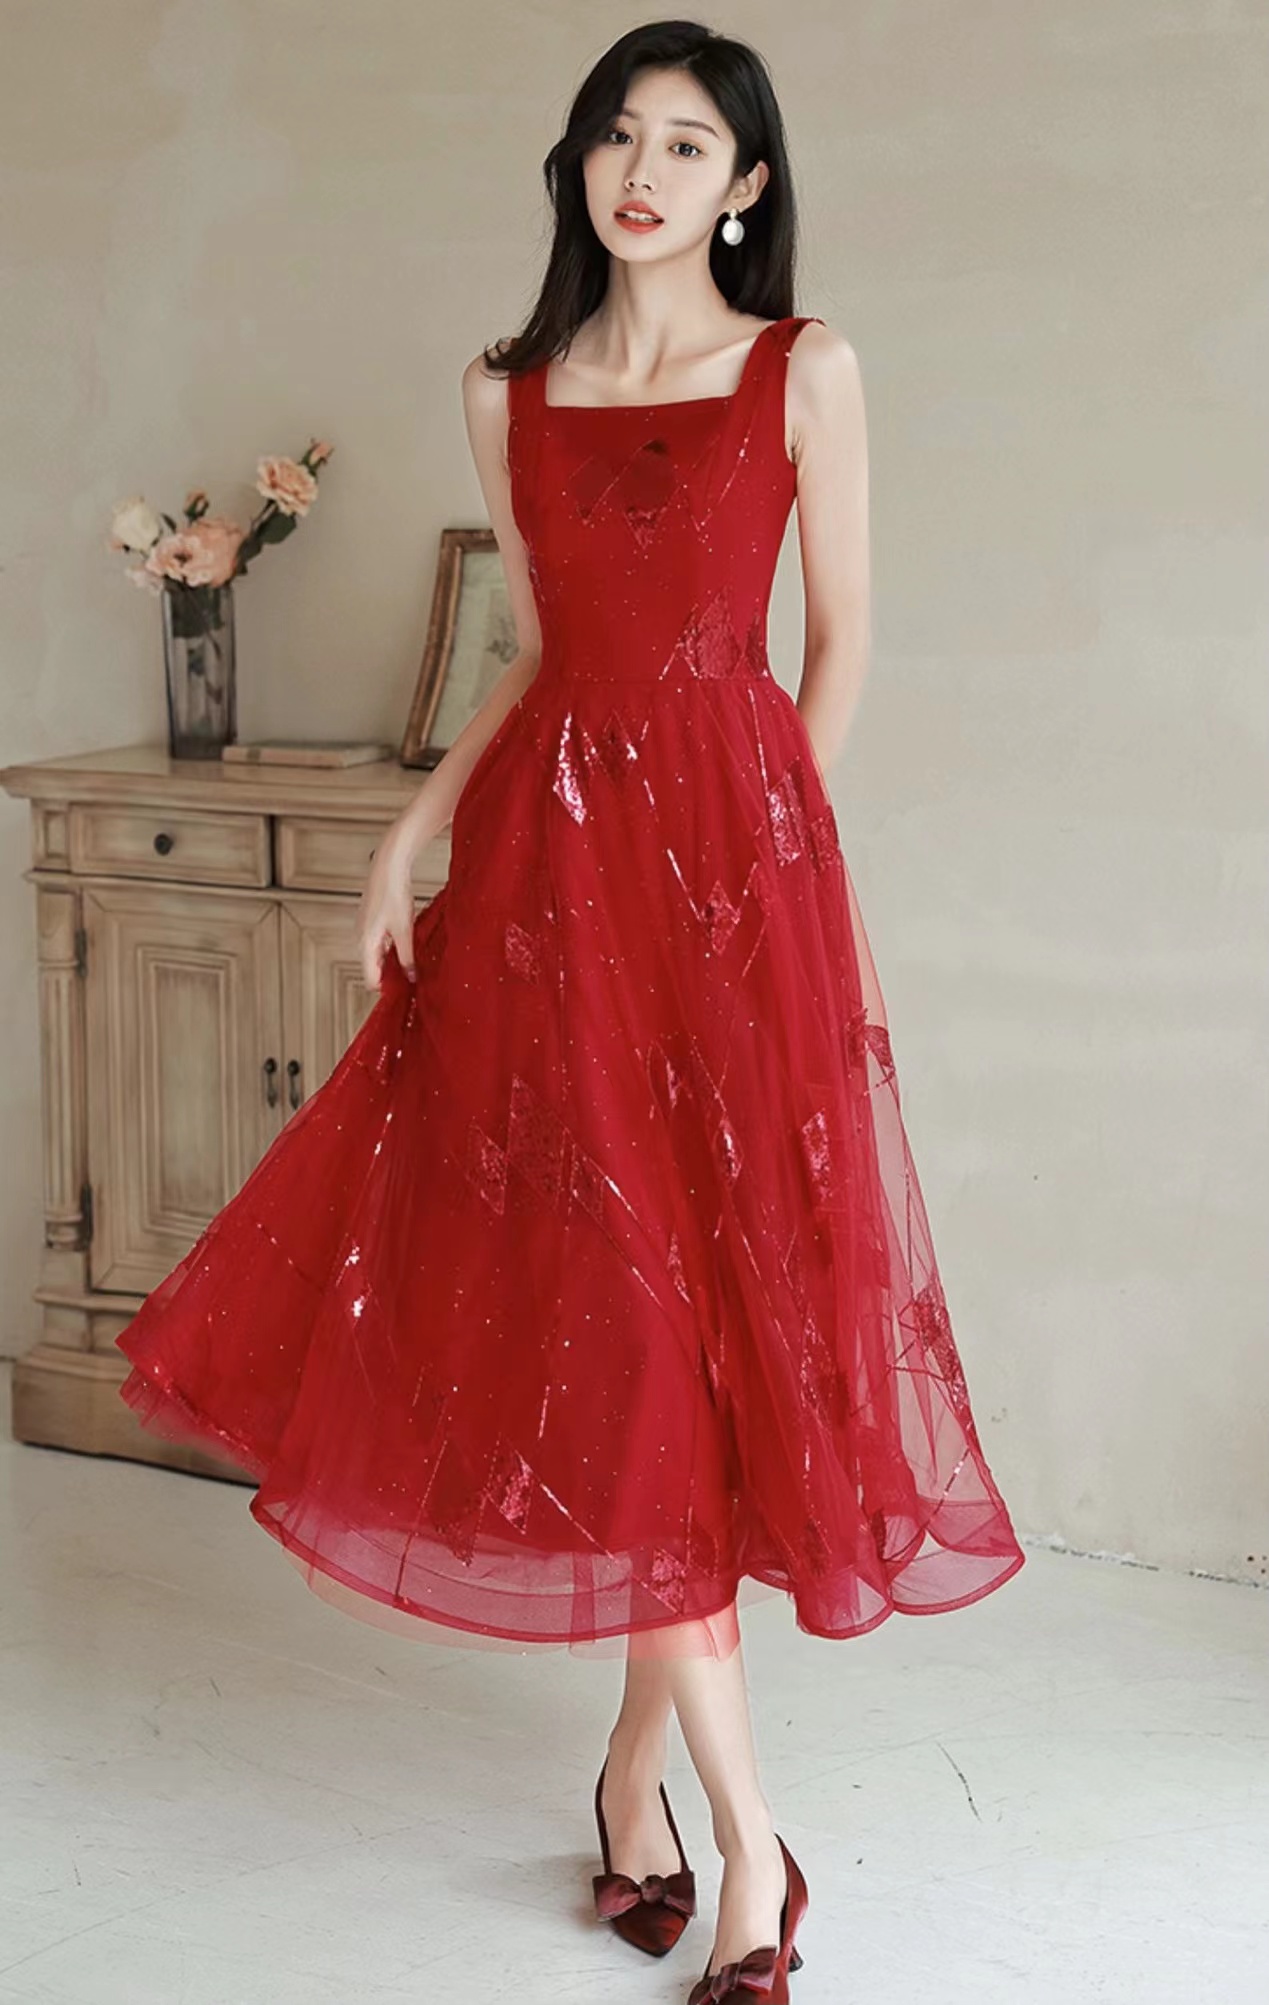 Red Daliy Dress,cute Birthday Dress,spaghetti Strap Party Dress,homecoming Dress,custom Made